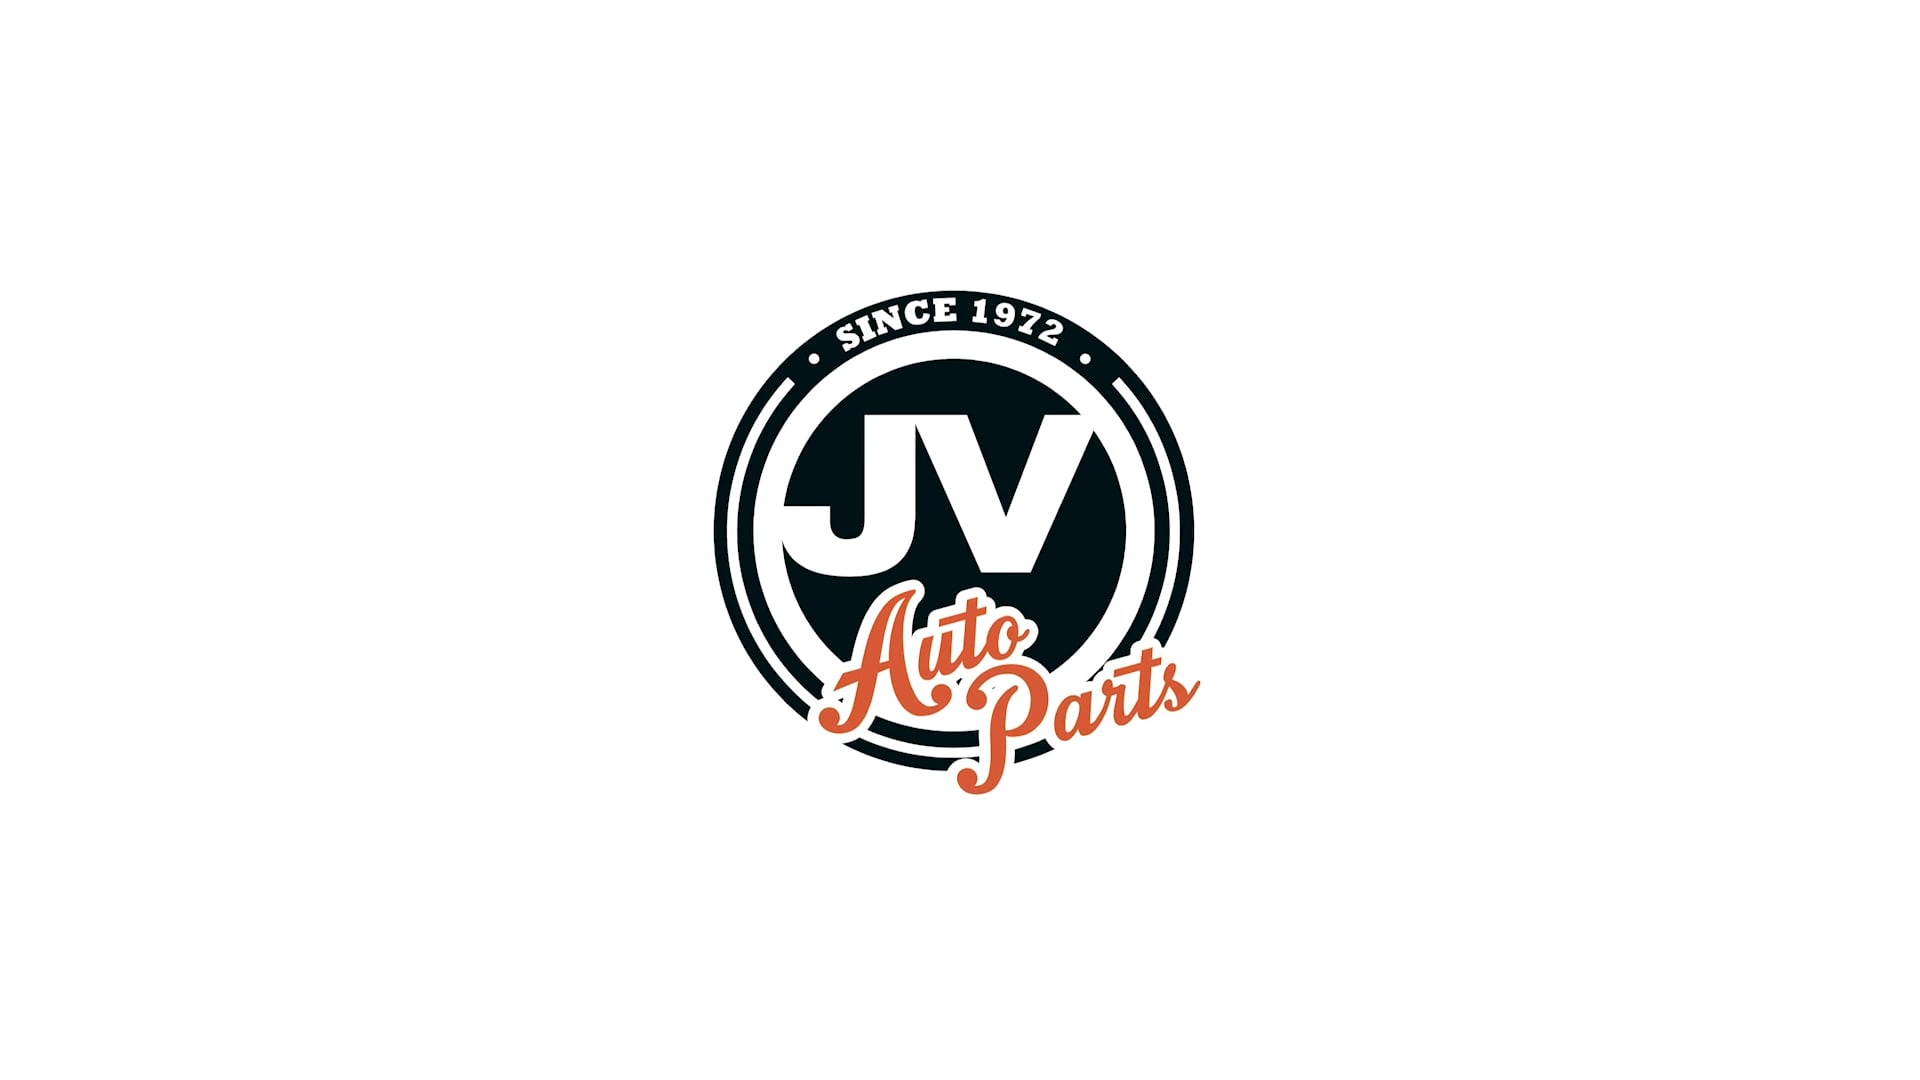 JV Auto Parts Social Media Commercial